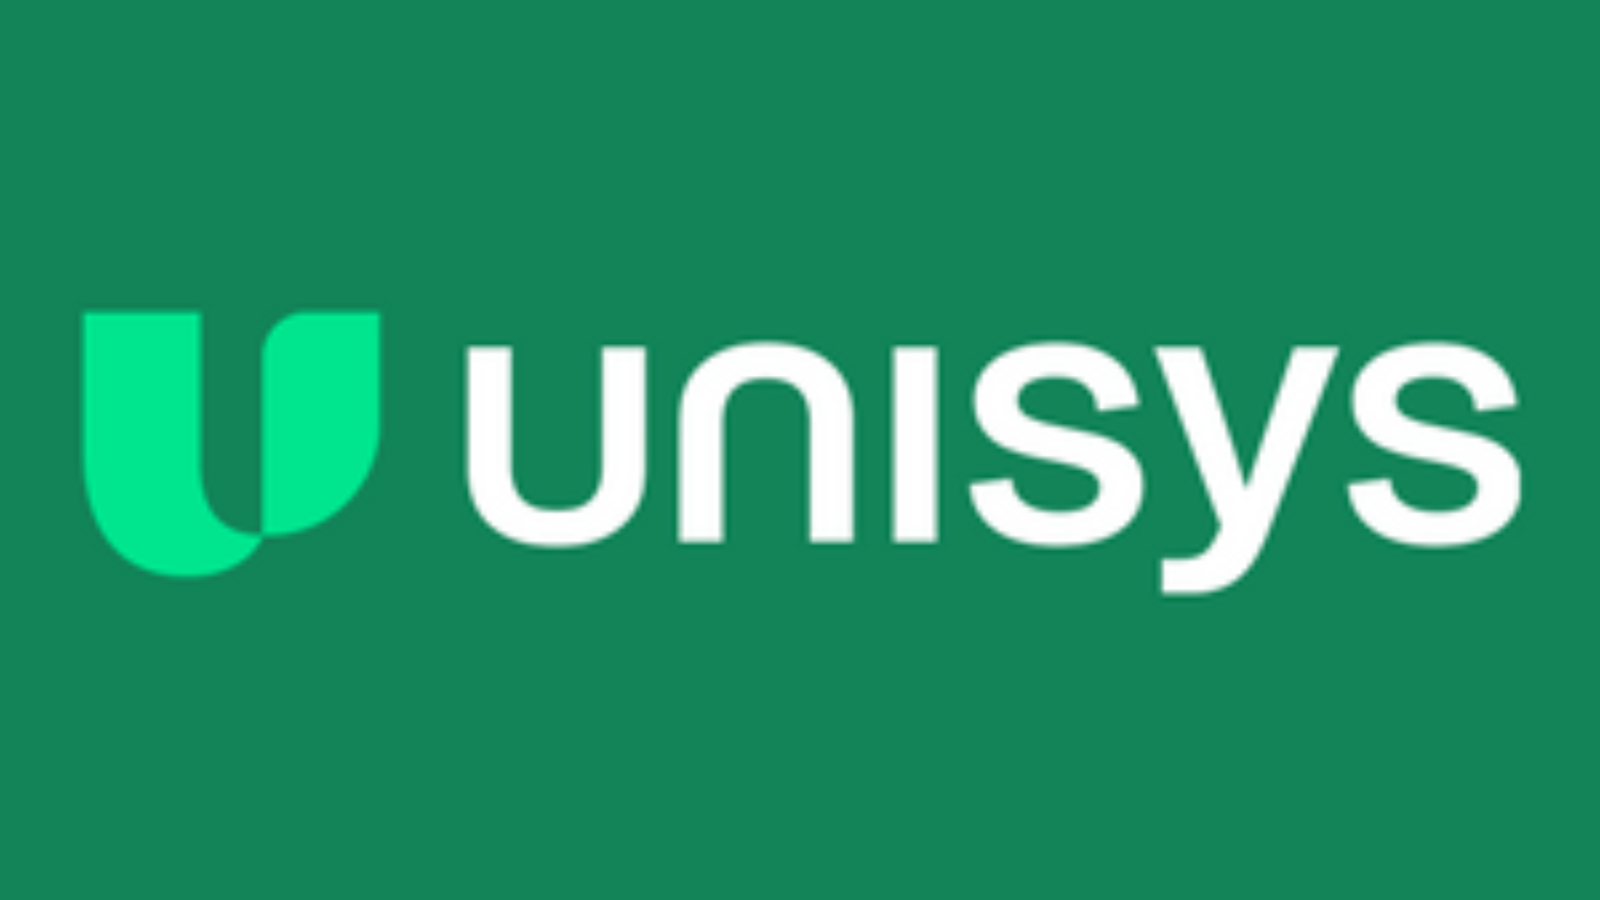 unisys-logo-CE009105AF-seeklogo.com